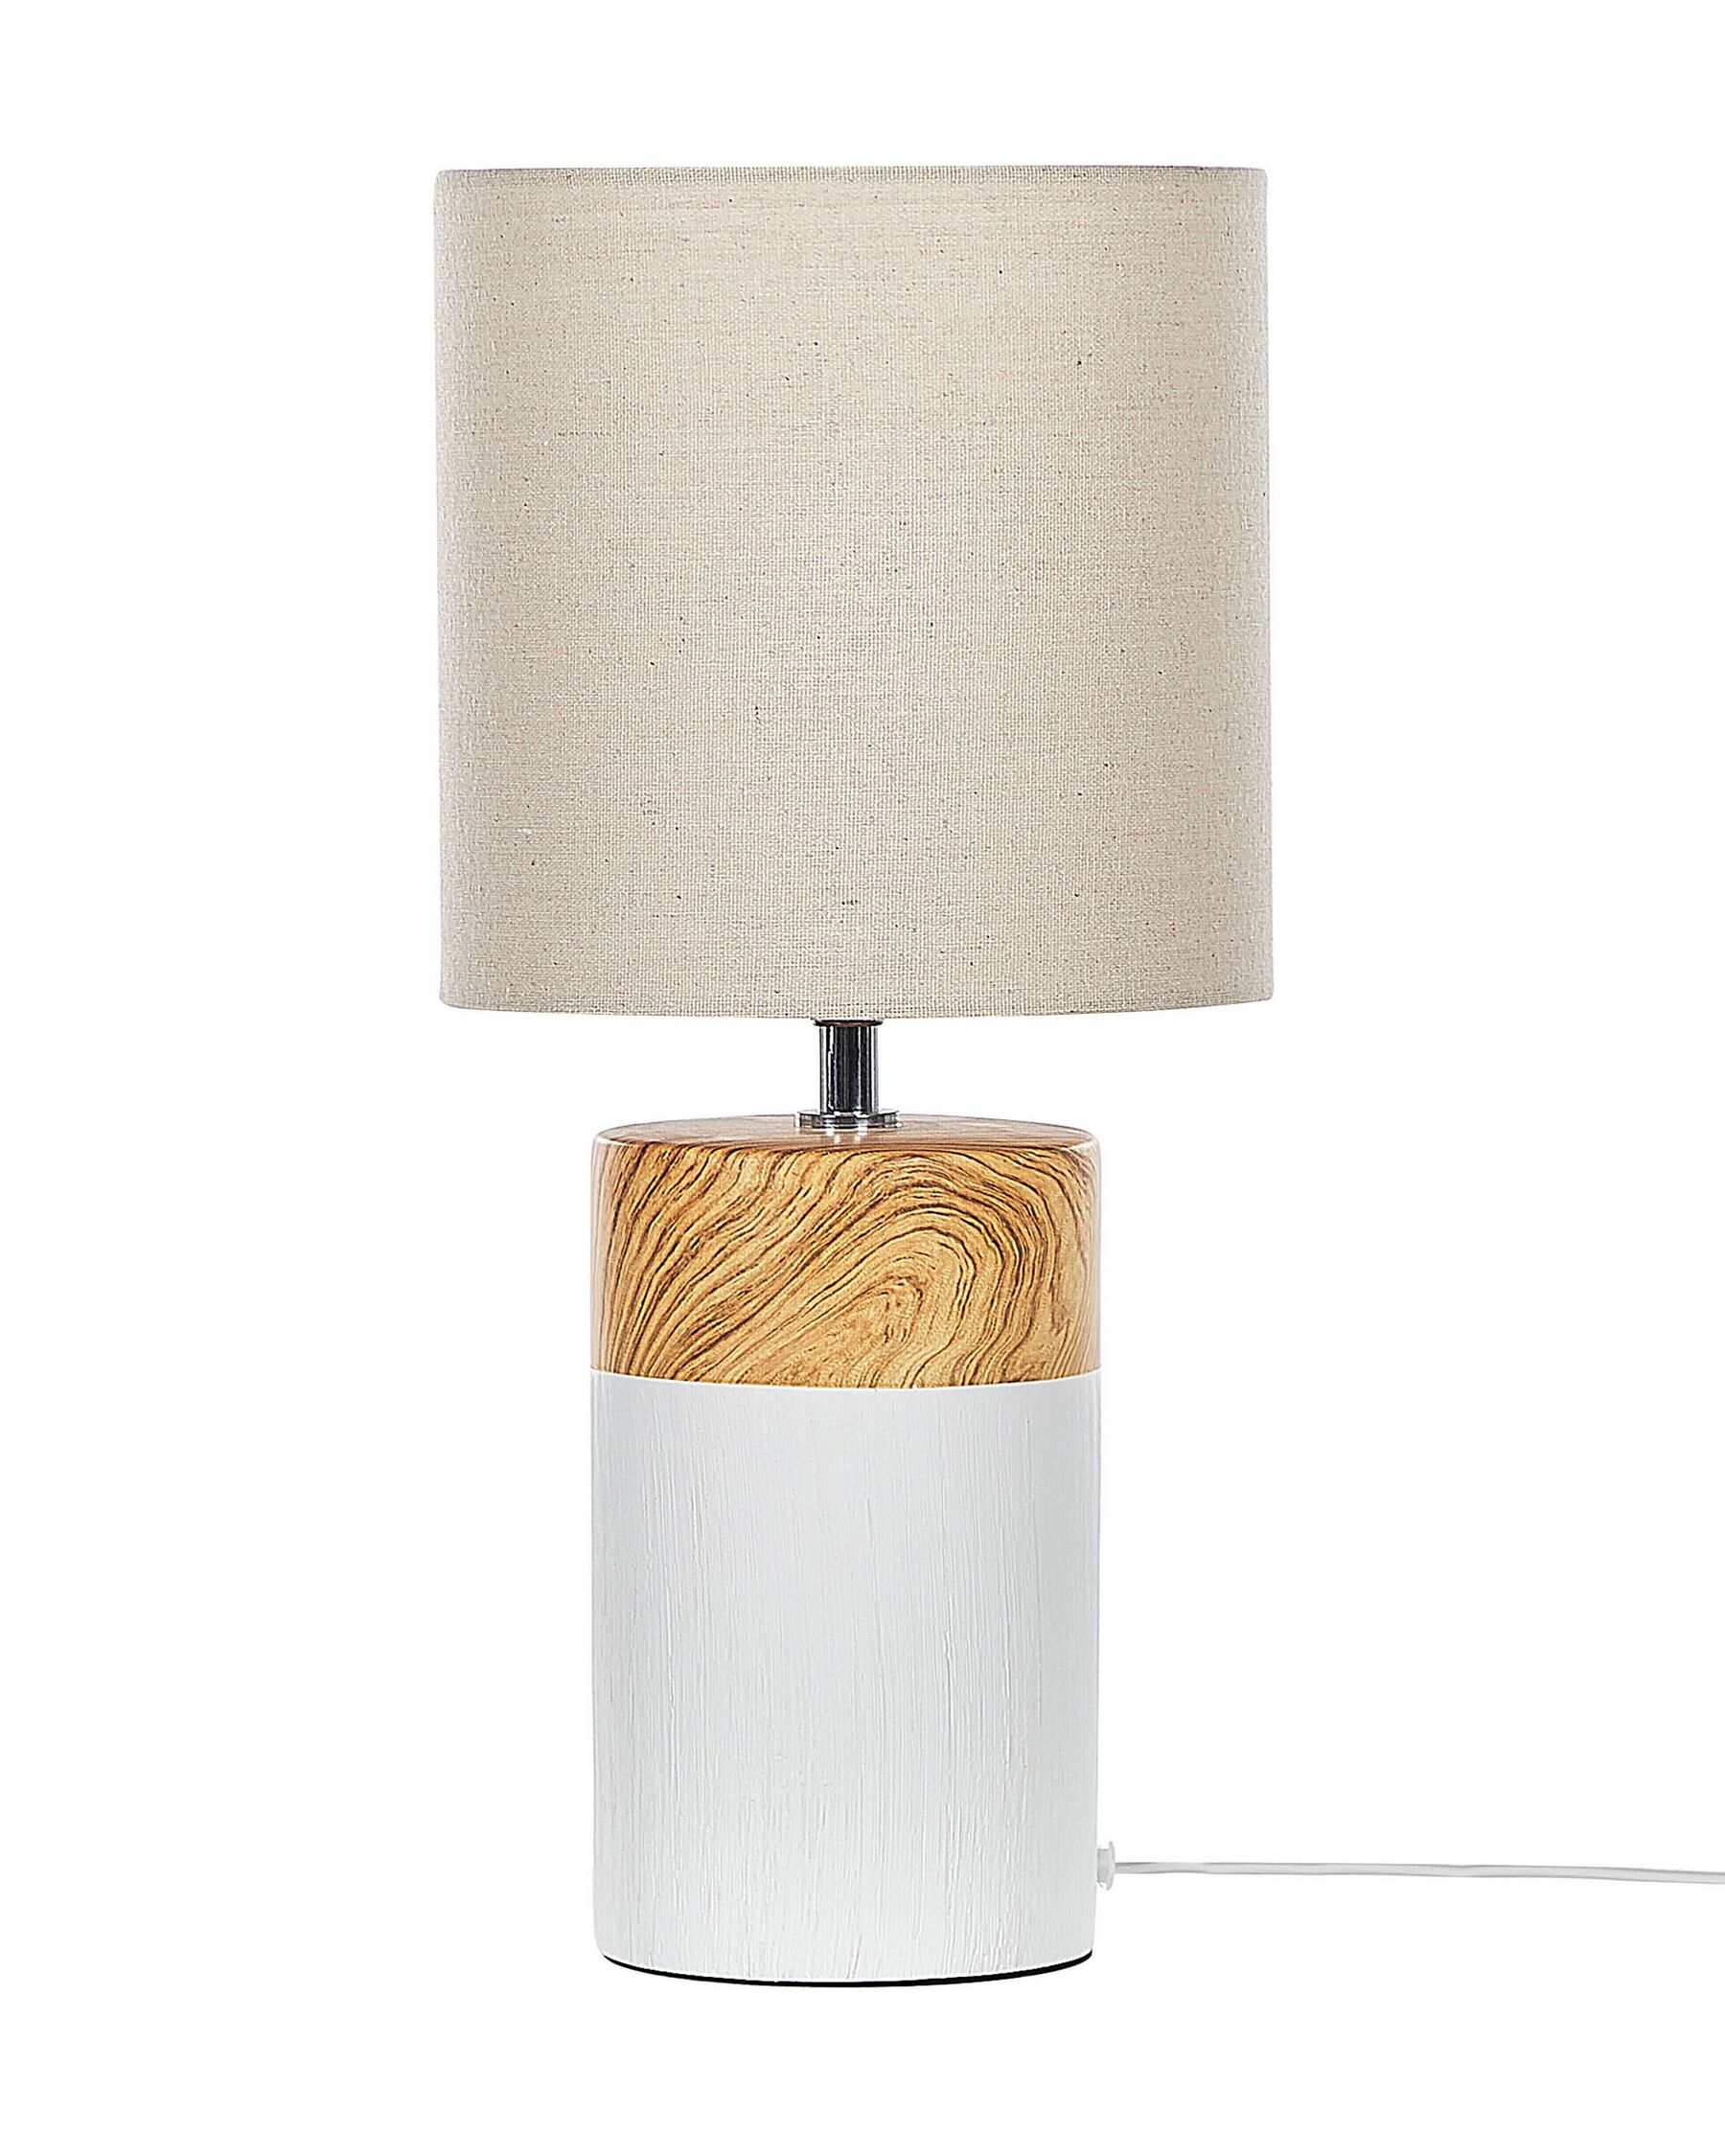 Ceramic Table Lamp White and Light Wood ALZEYA_822427